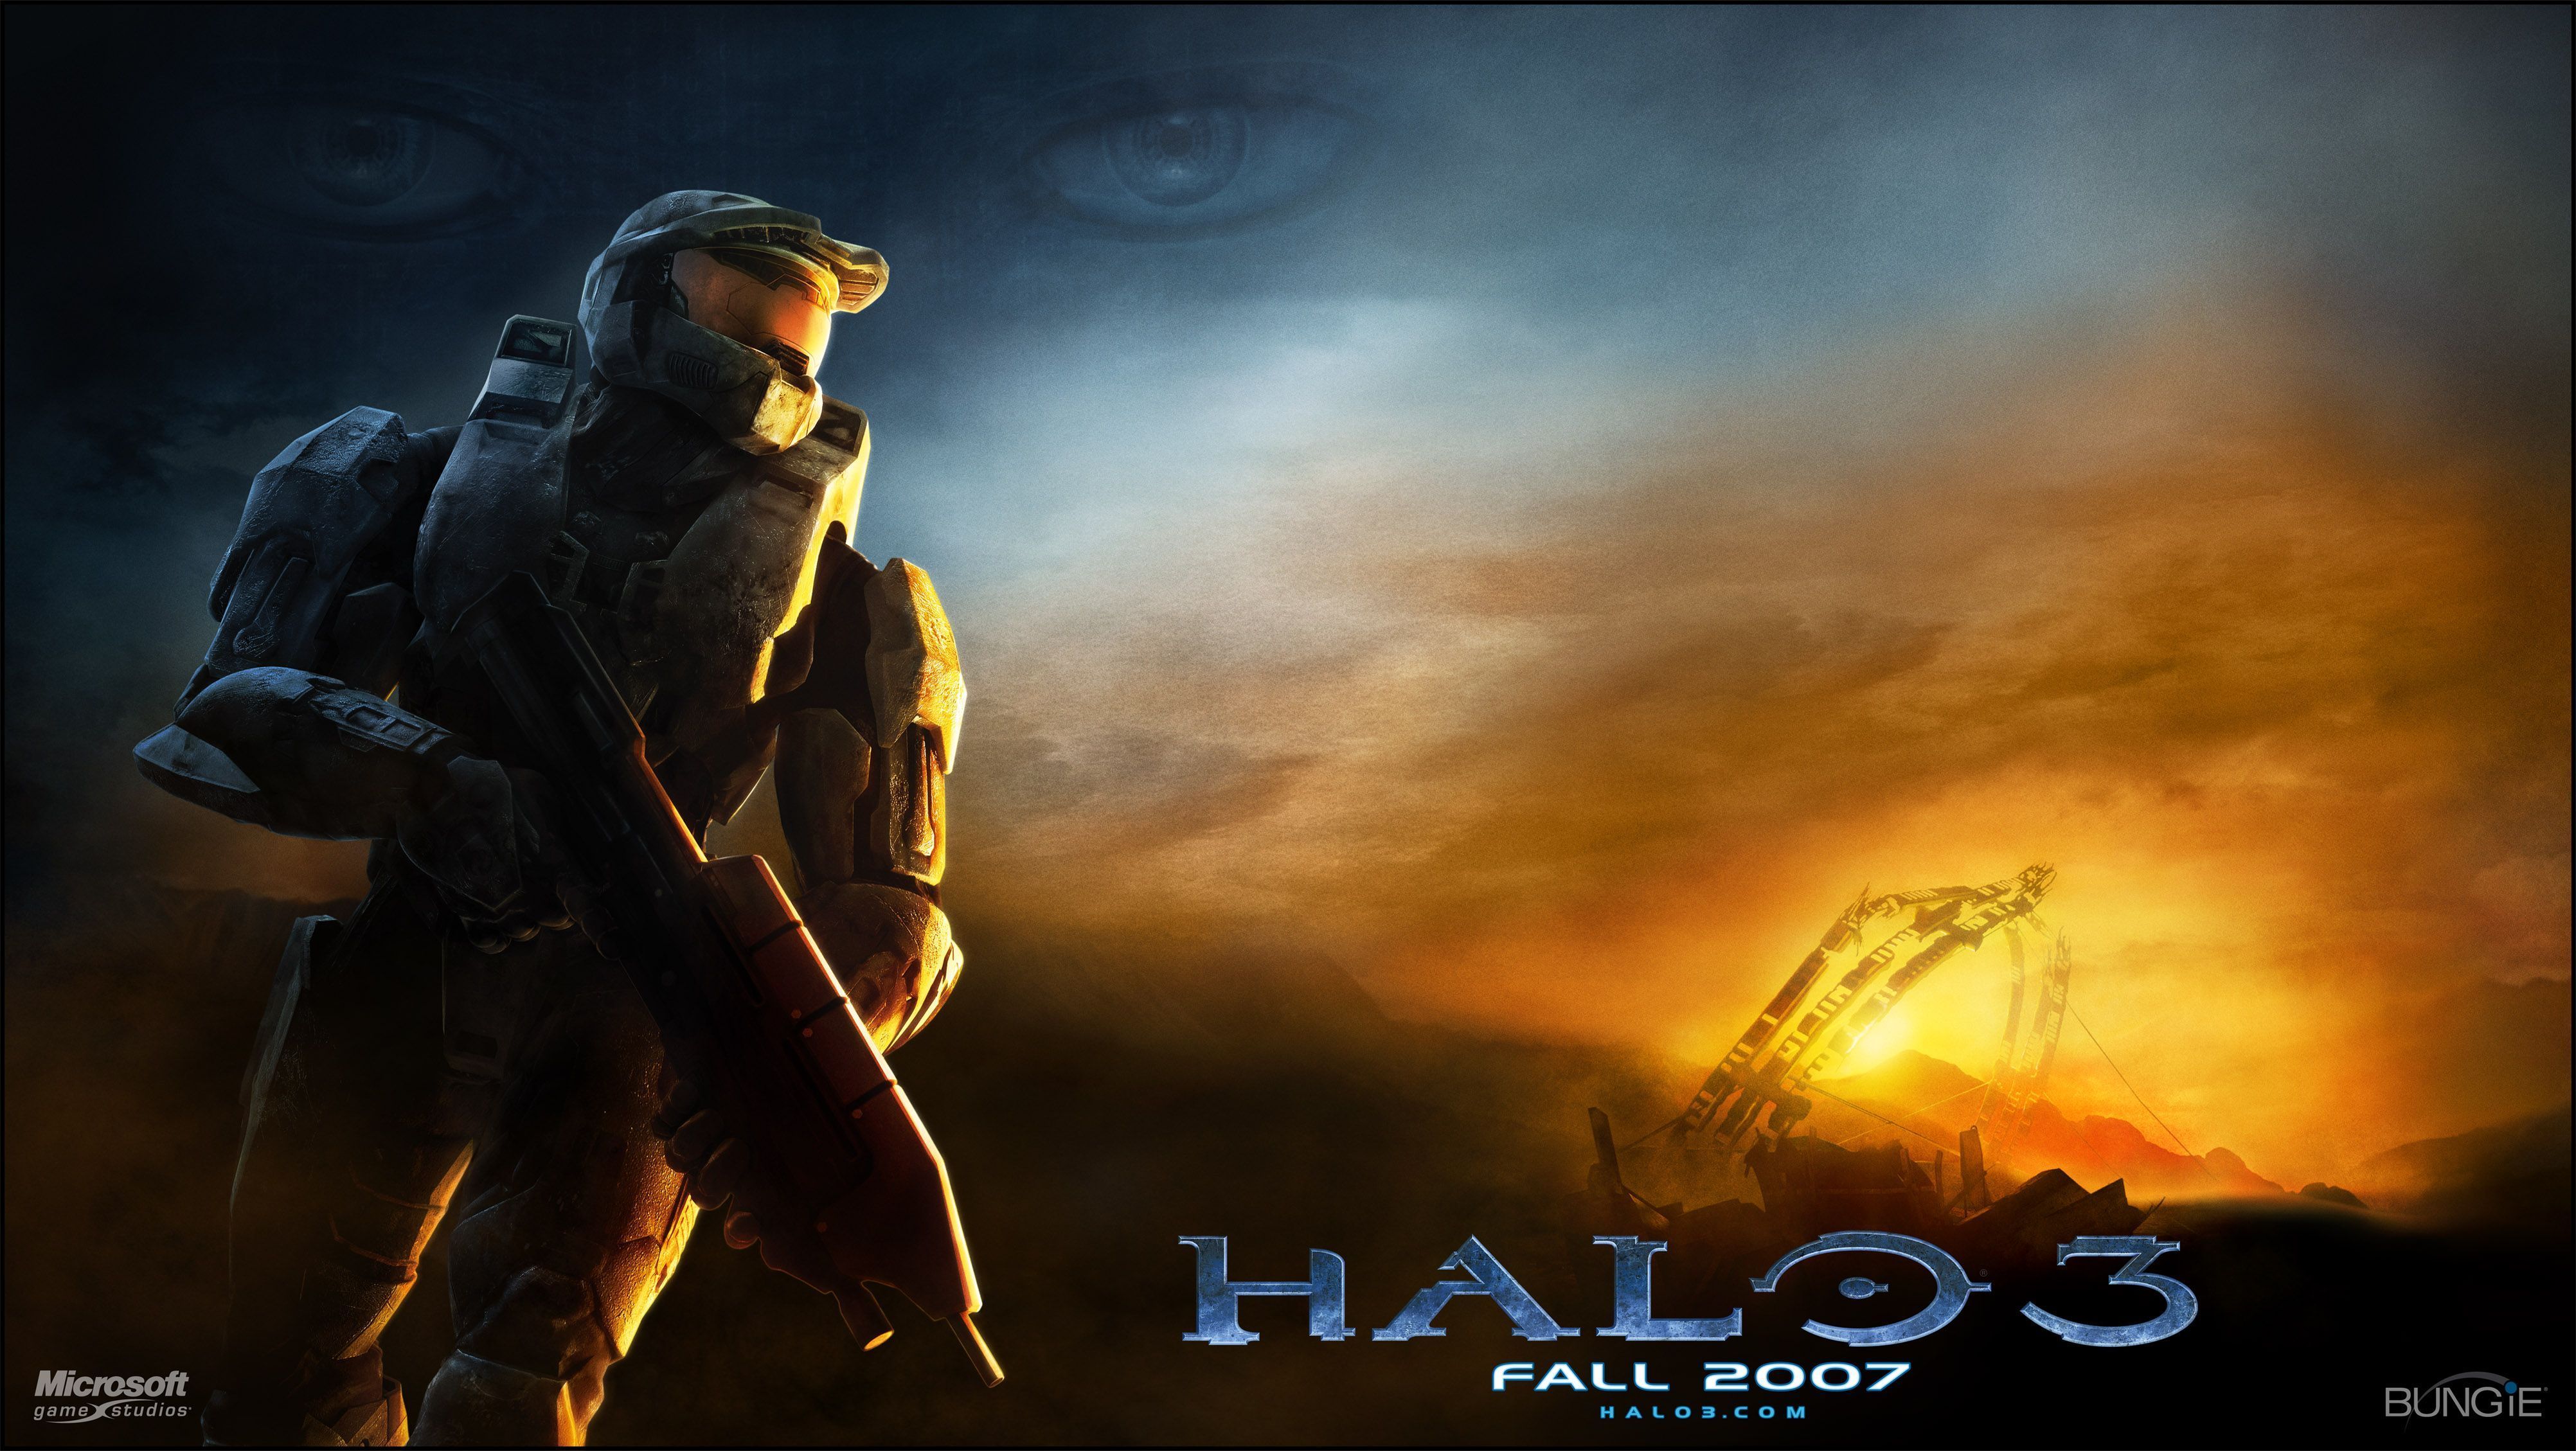 Halo #449188 | Full HD Widescreen wallpapers for desktop download